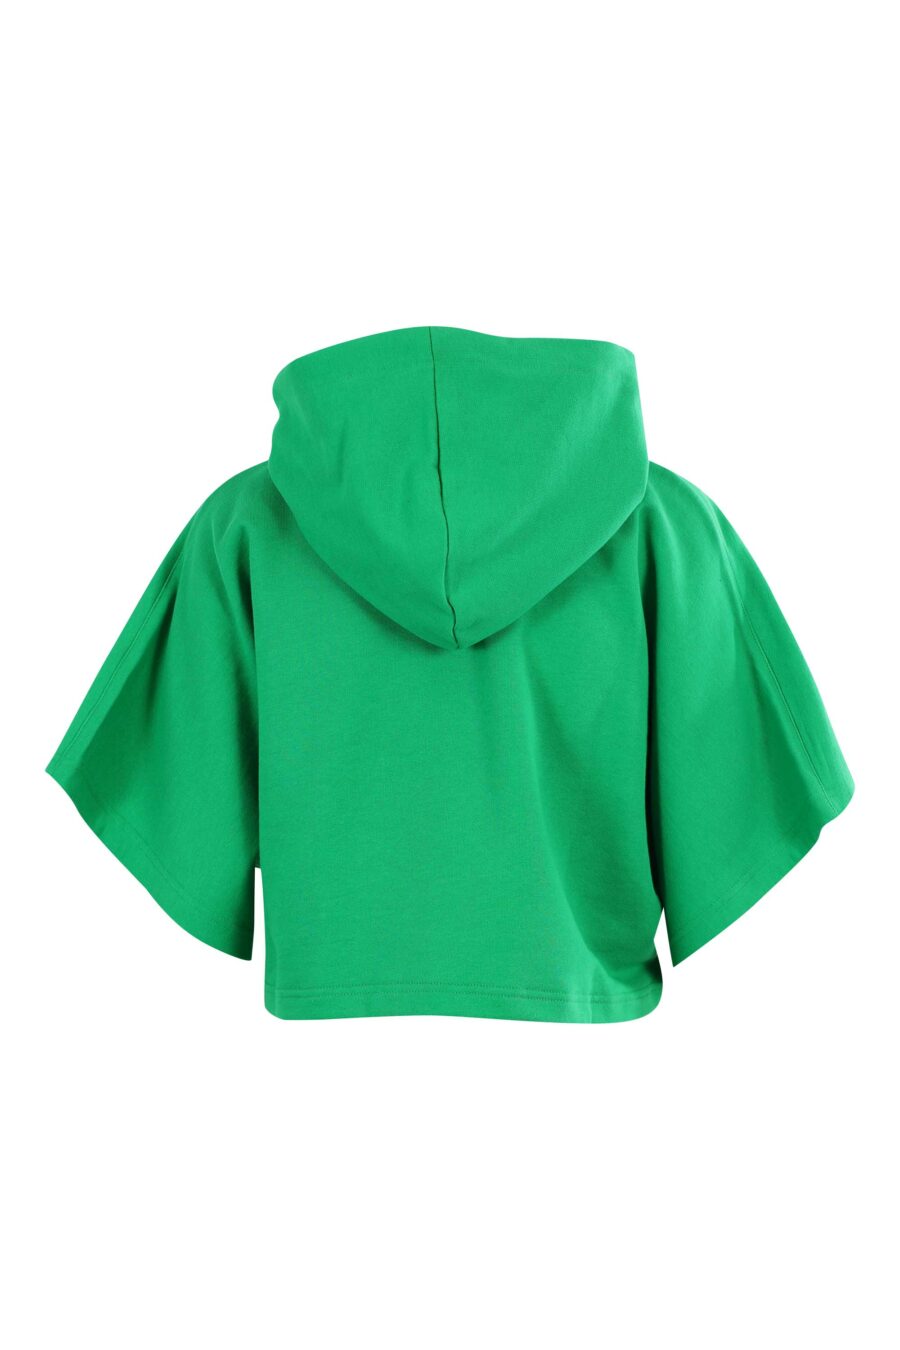 Green short sleeve hooded sweatshirt with eye and star logo - 8052672417961 2